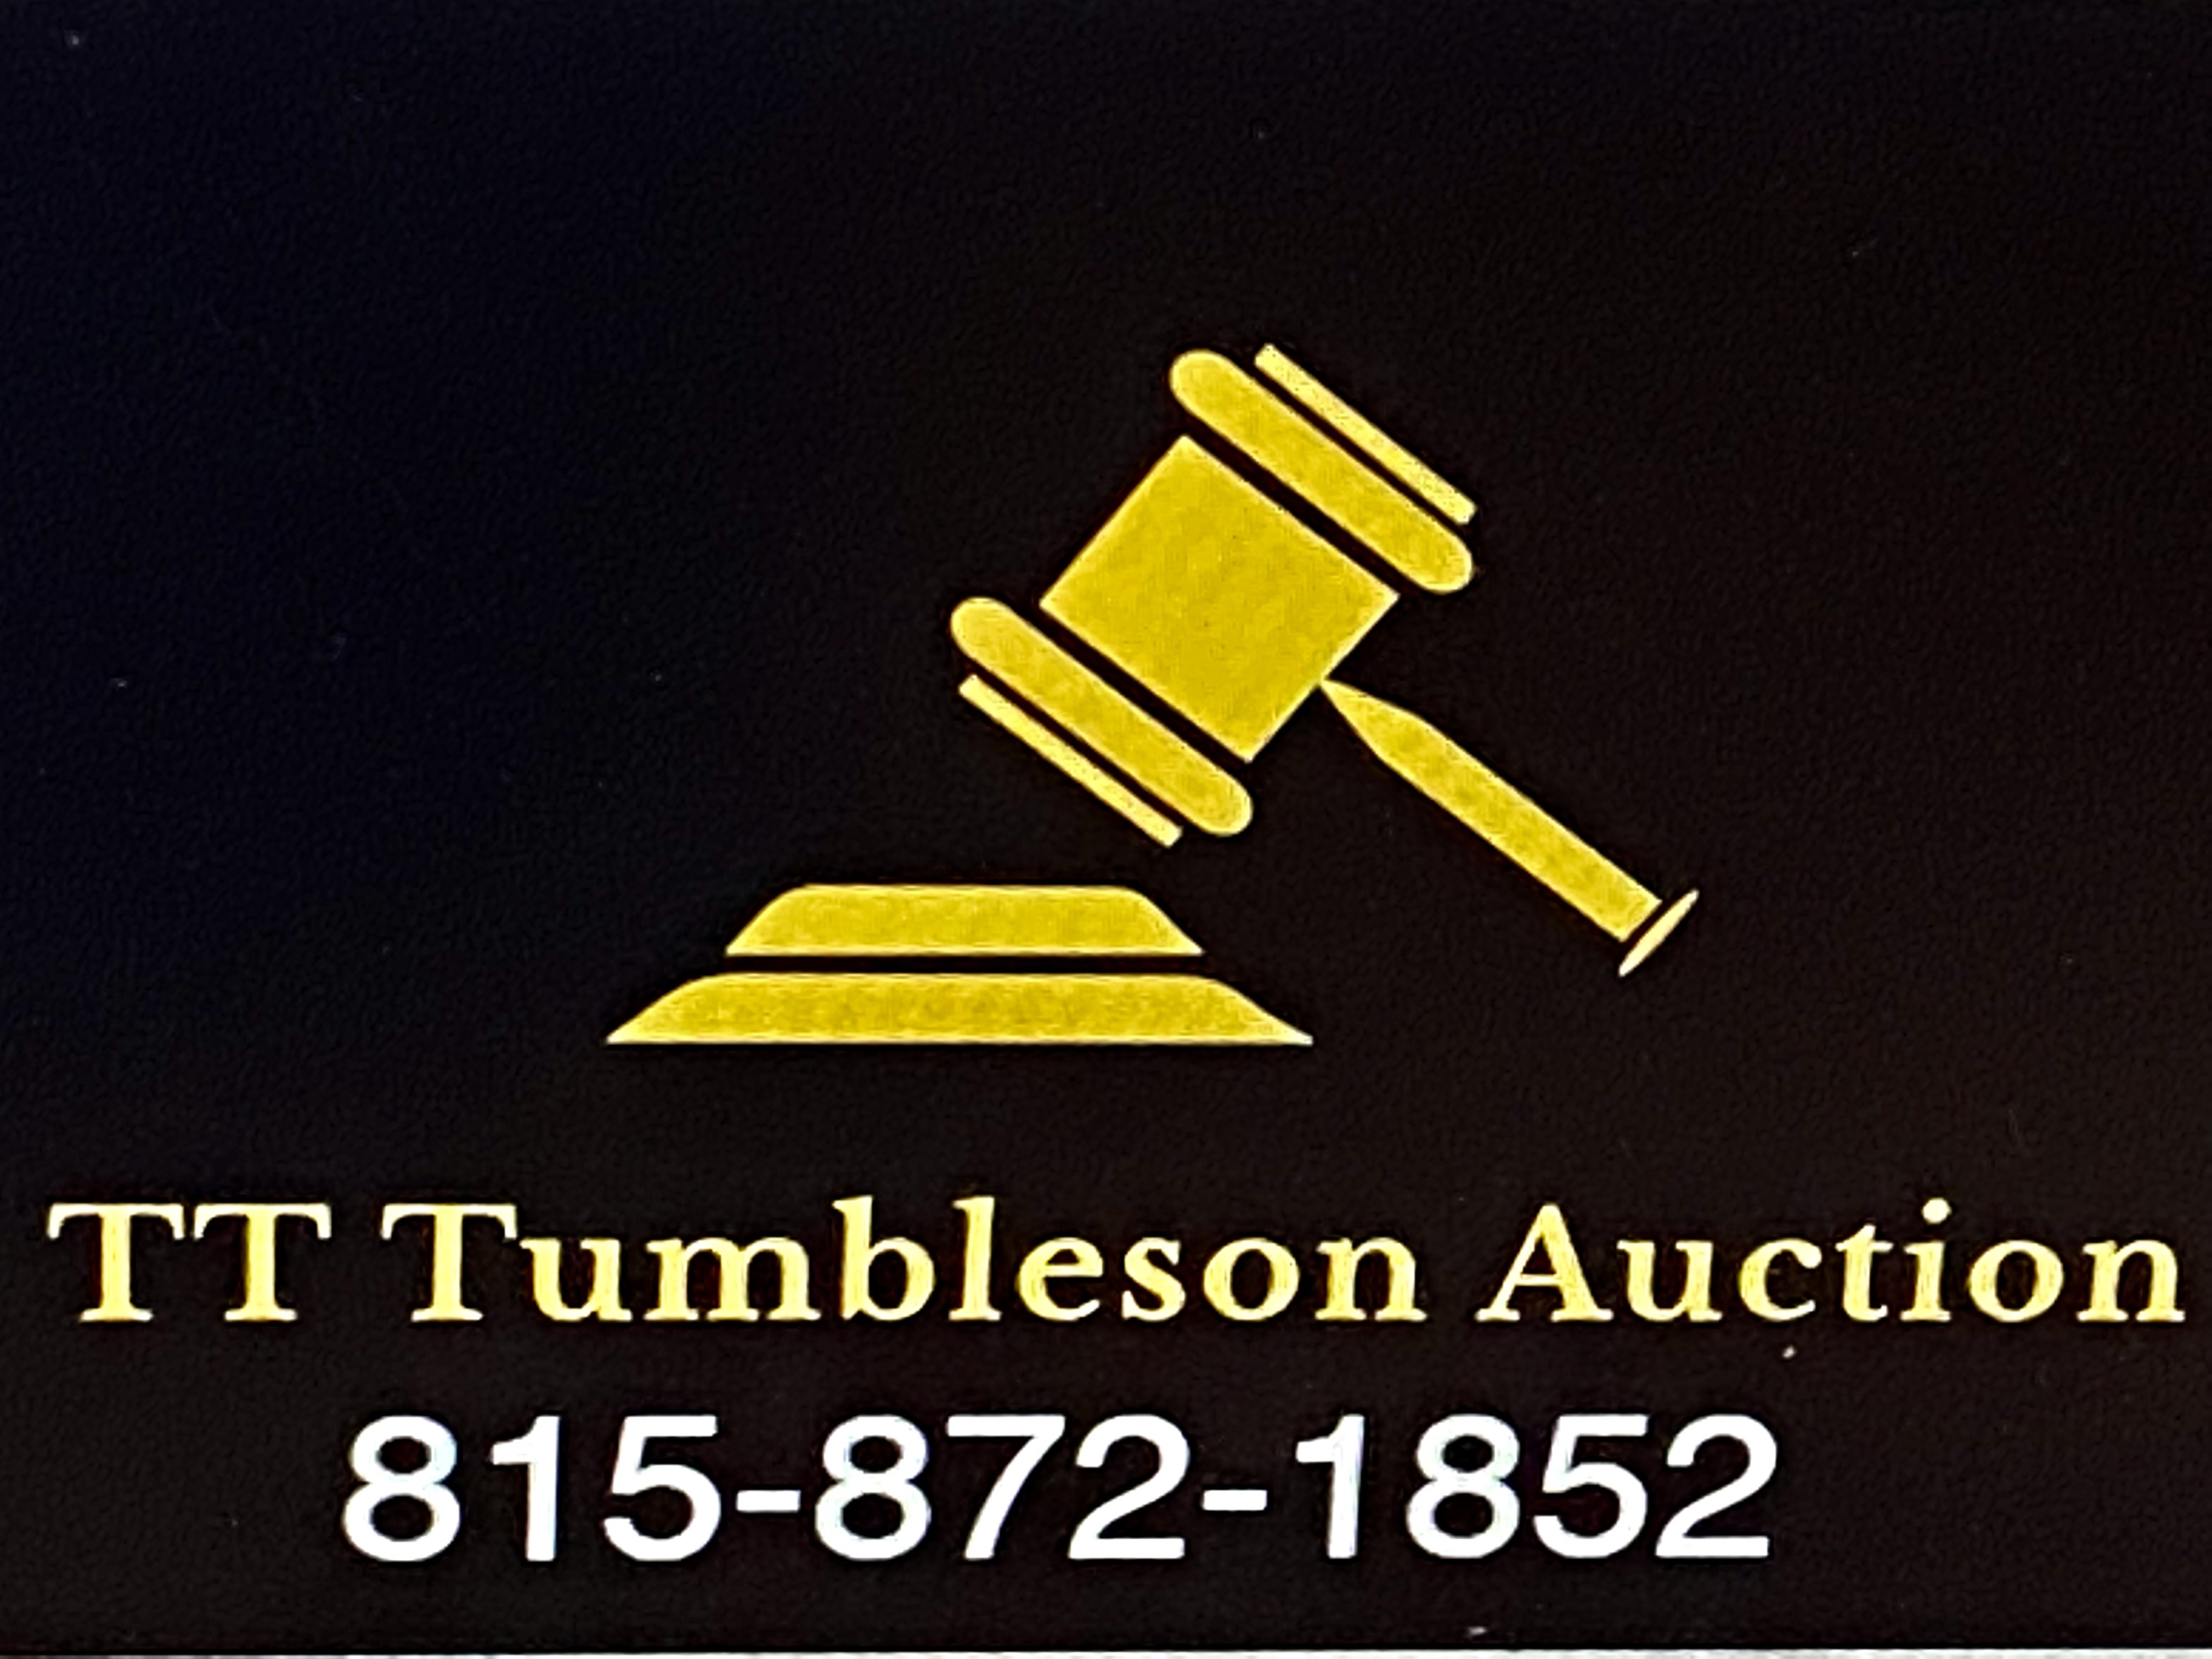 Tumbleson Auction Company